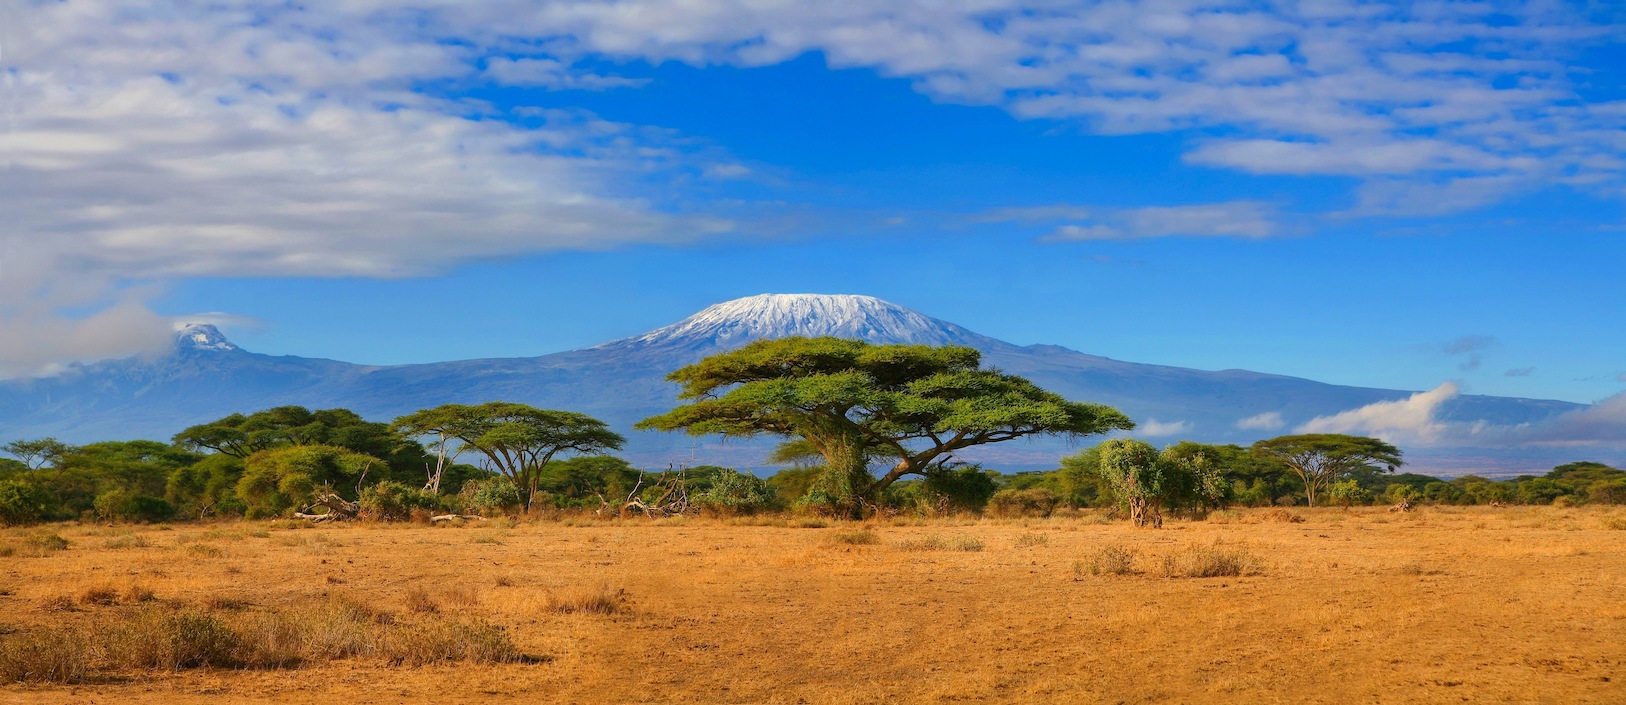 Mt Kilimanjaro in Tanzania beyond savannah in the foreground